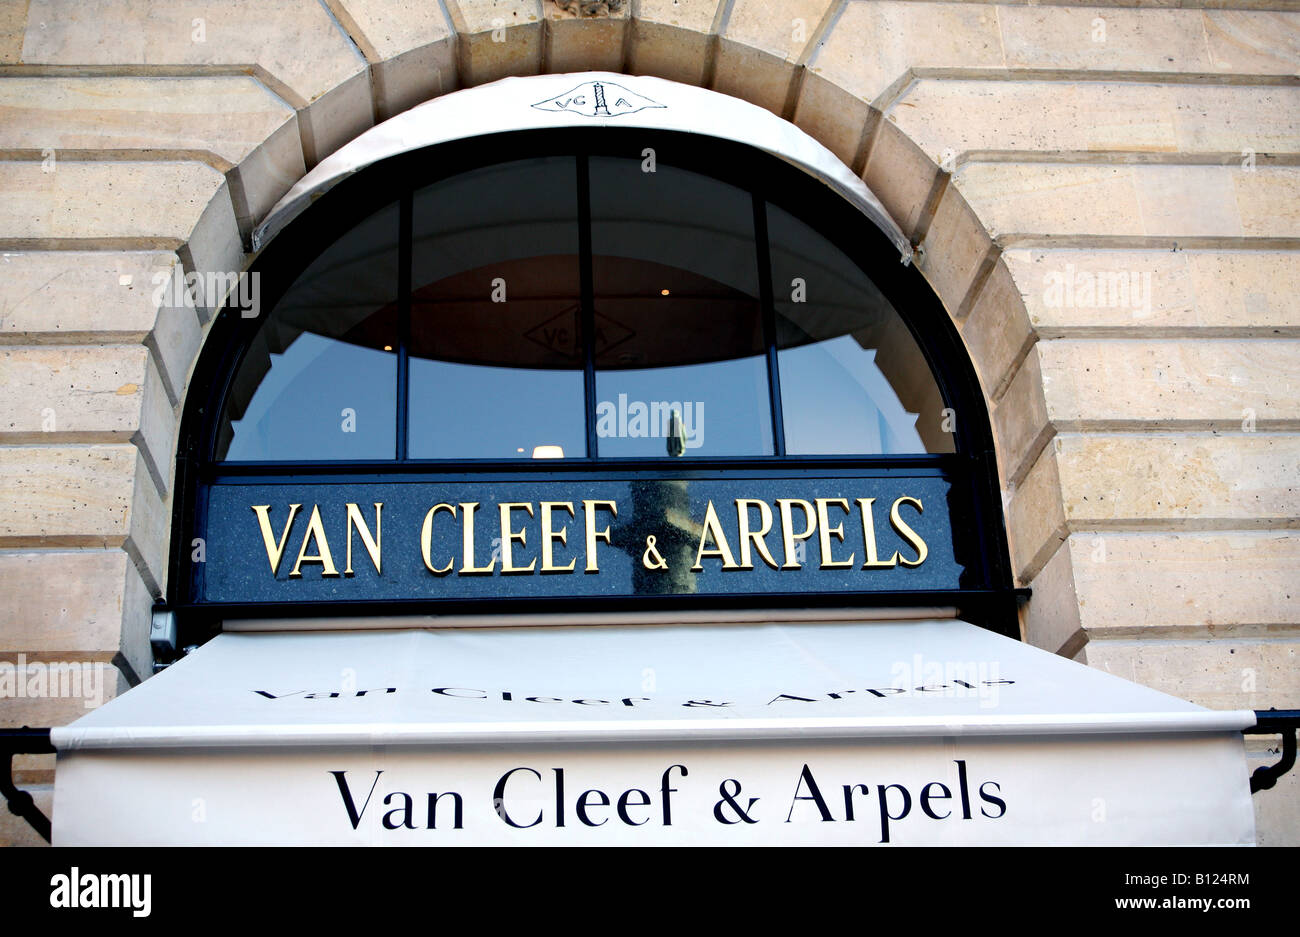 Van cleef & arpels paris hi-res stock photography and images - Alamy